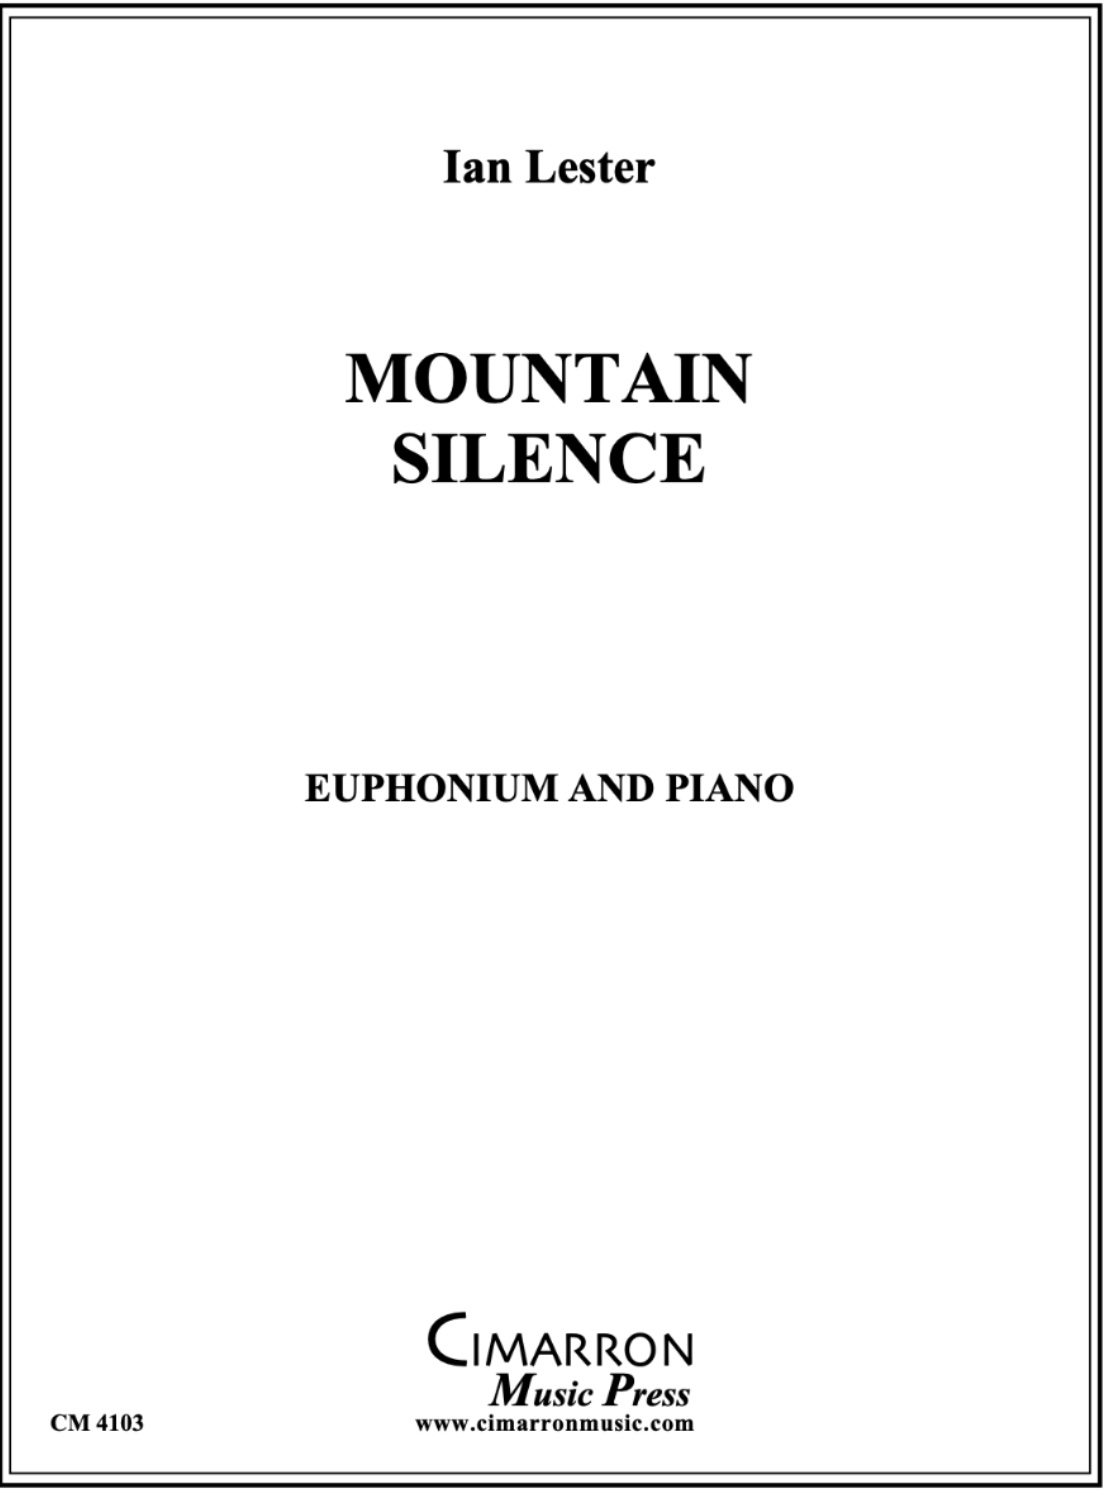 Mountain Silence - Ian Lester - Euphonium and Piano